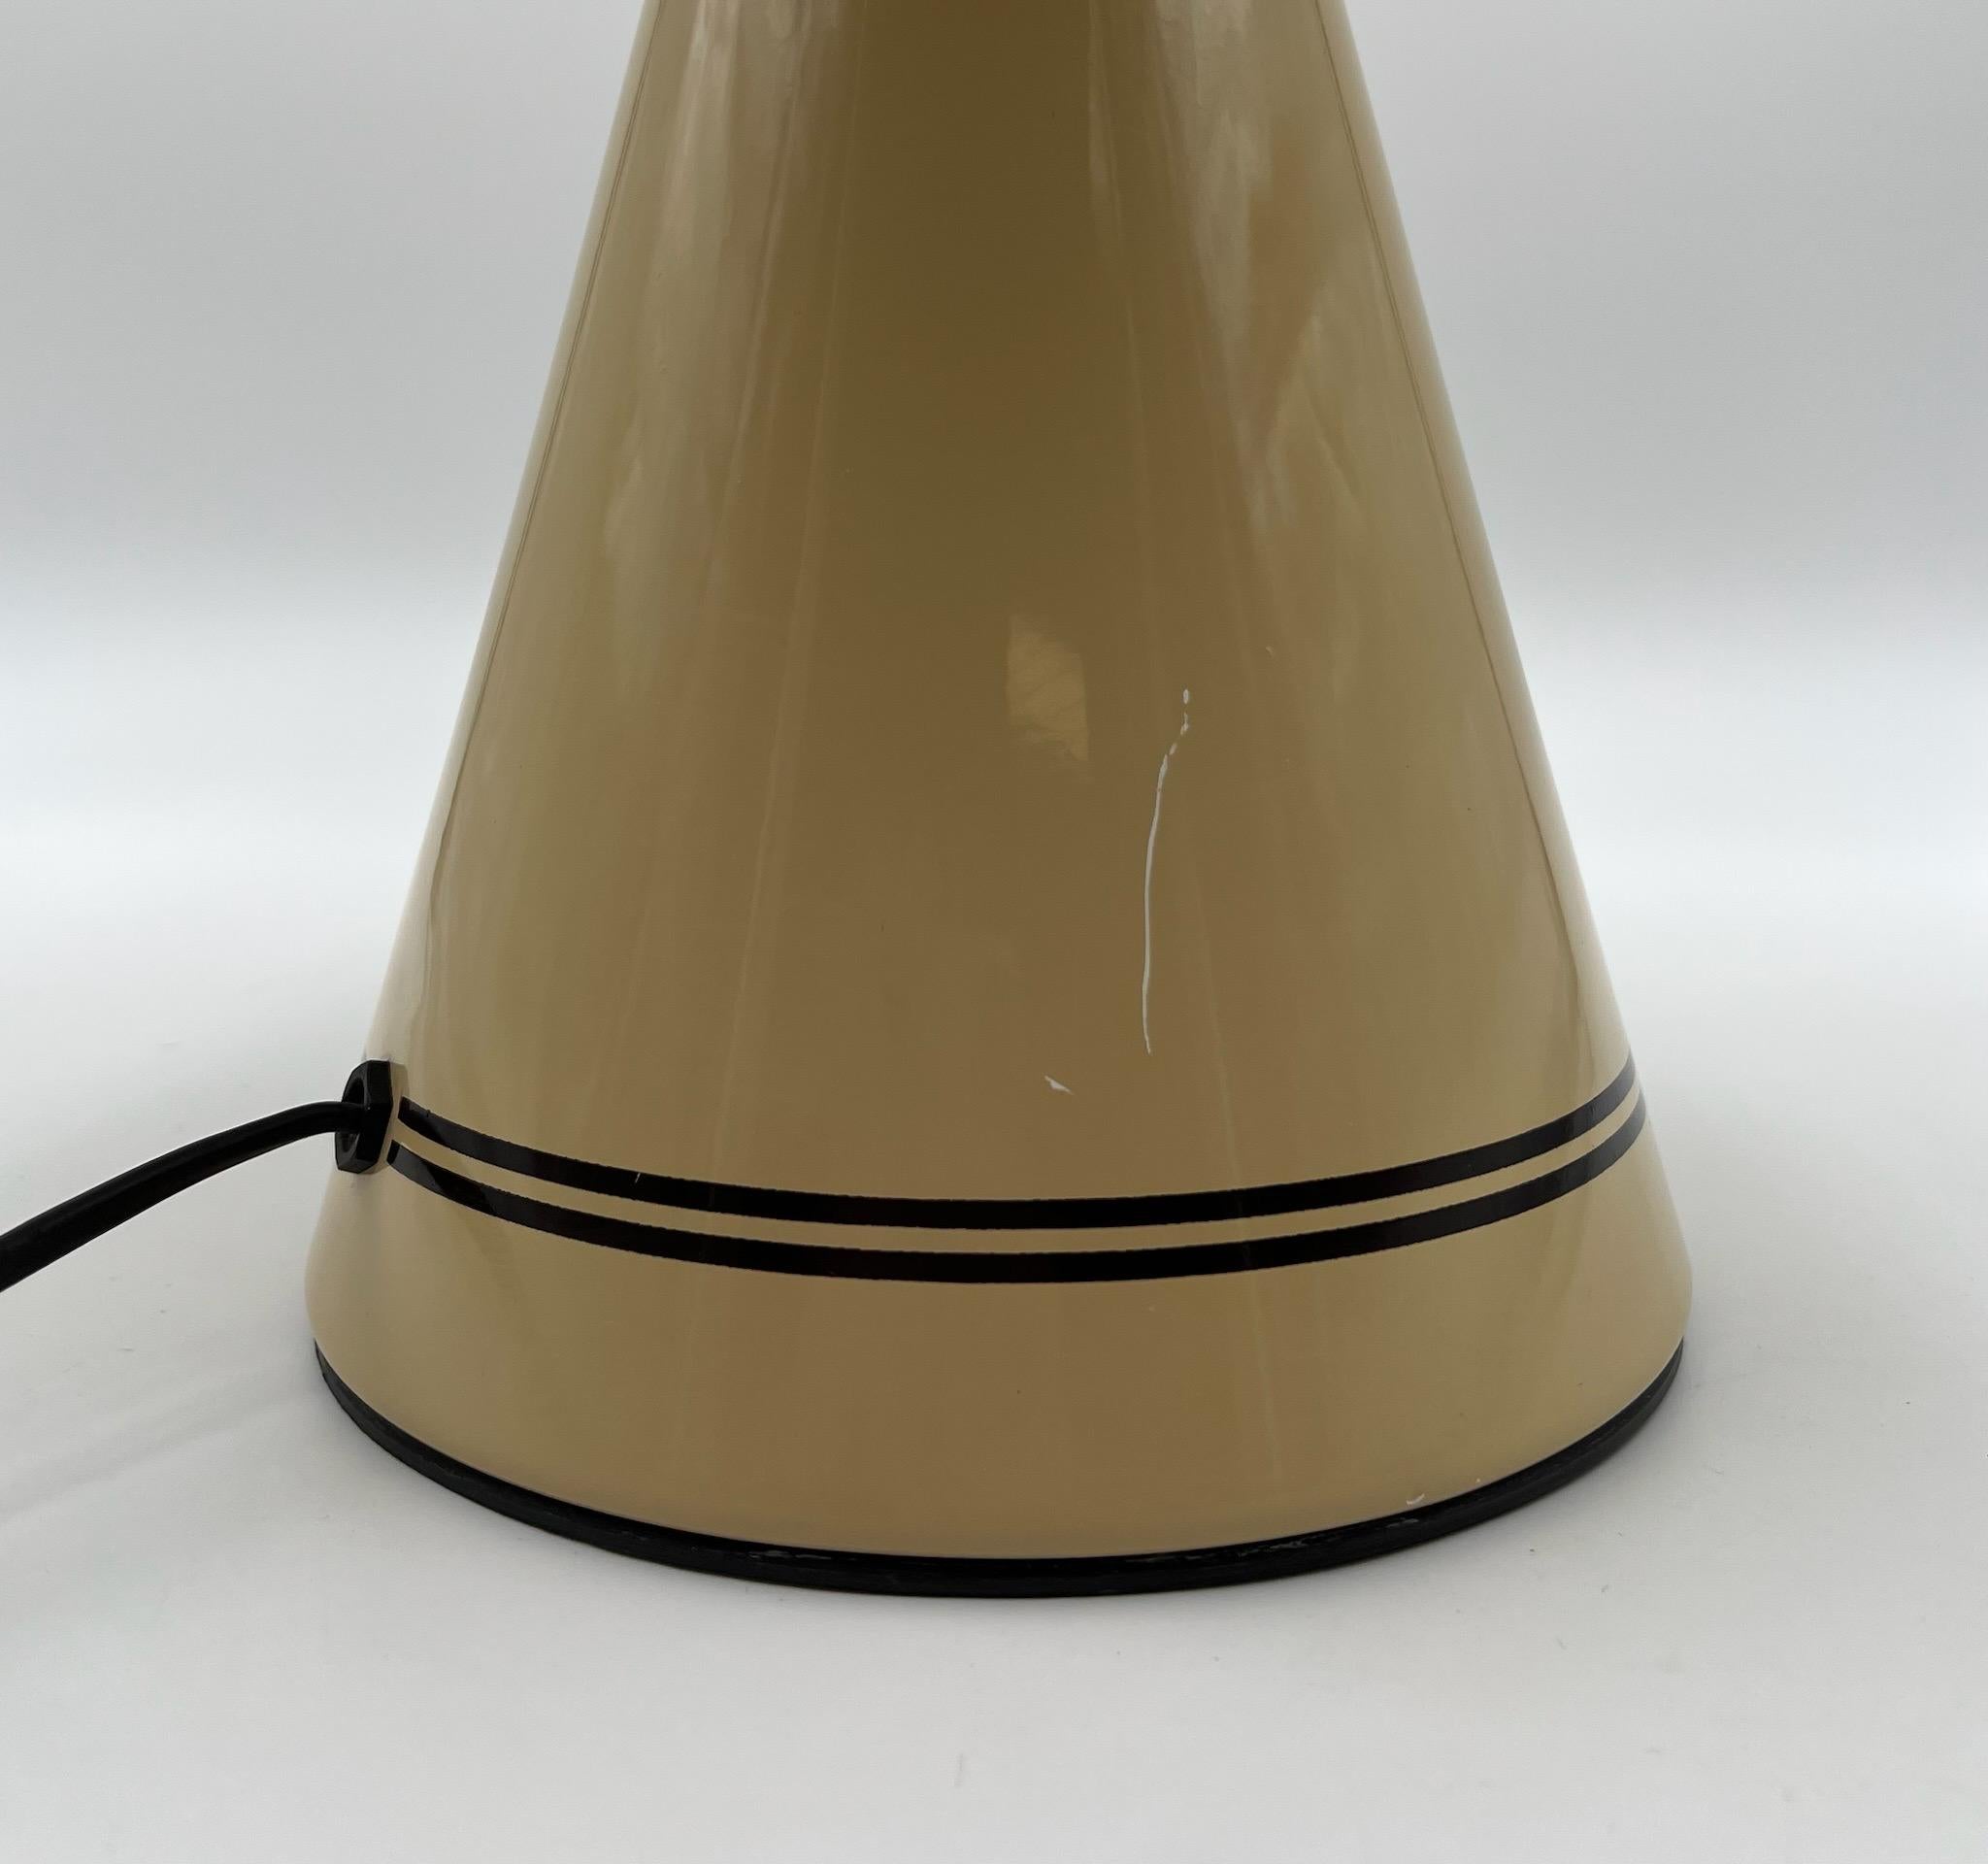 Metal Iconic Mushroom 70s Lamp ‘Baobab’ by iGuzzini - Italian Space Age Iconic Lamp